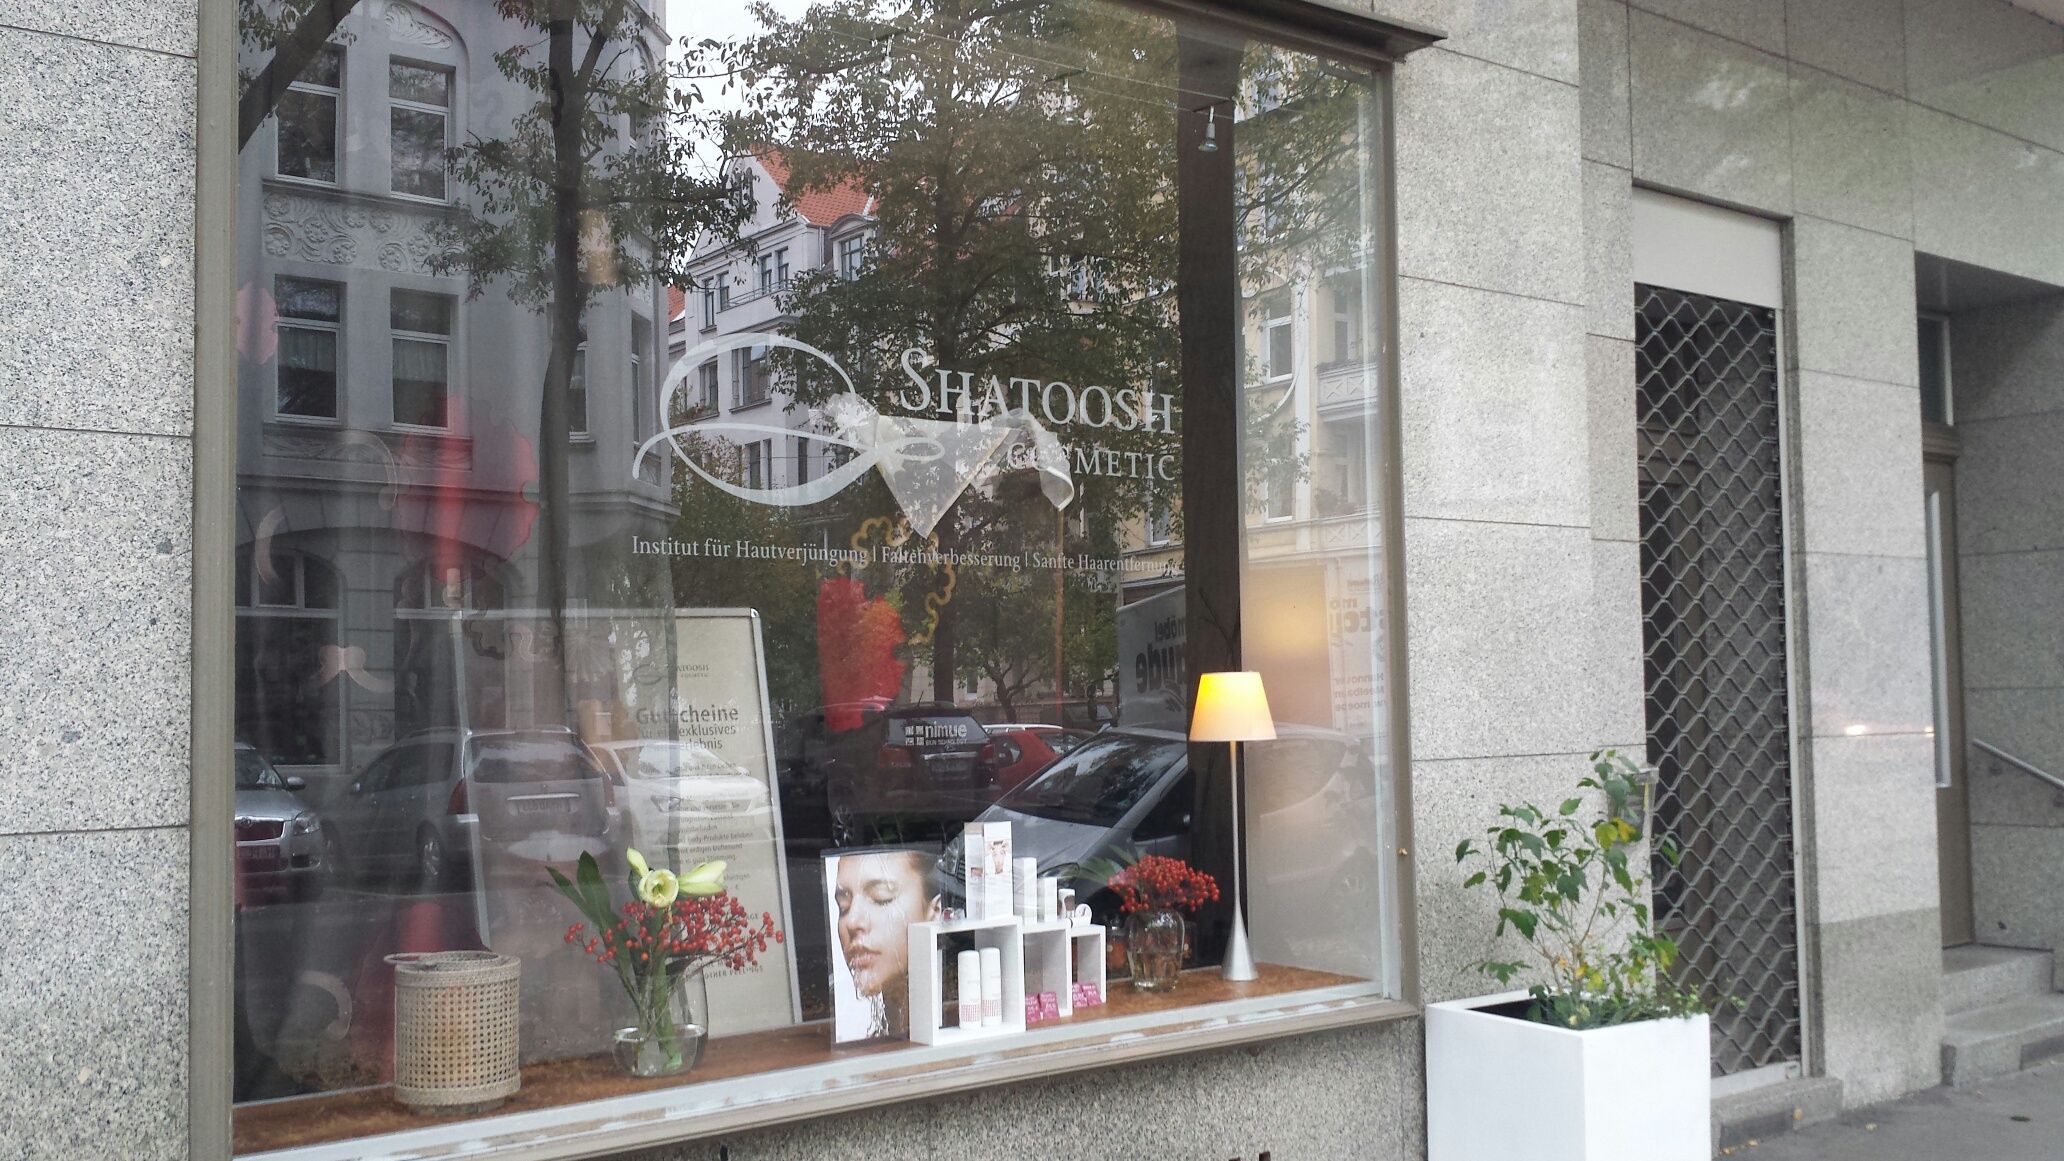 Bild 1 Shatoosh-Cosmetic in Hannover